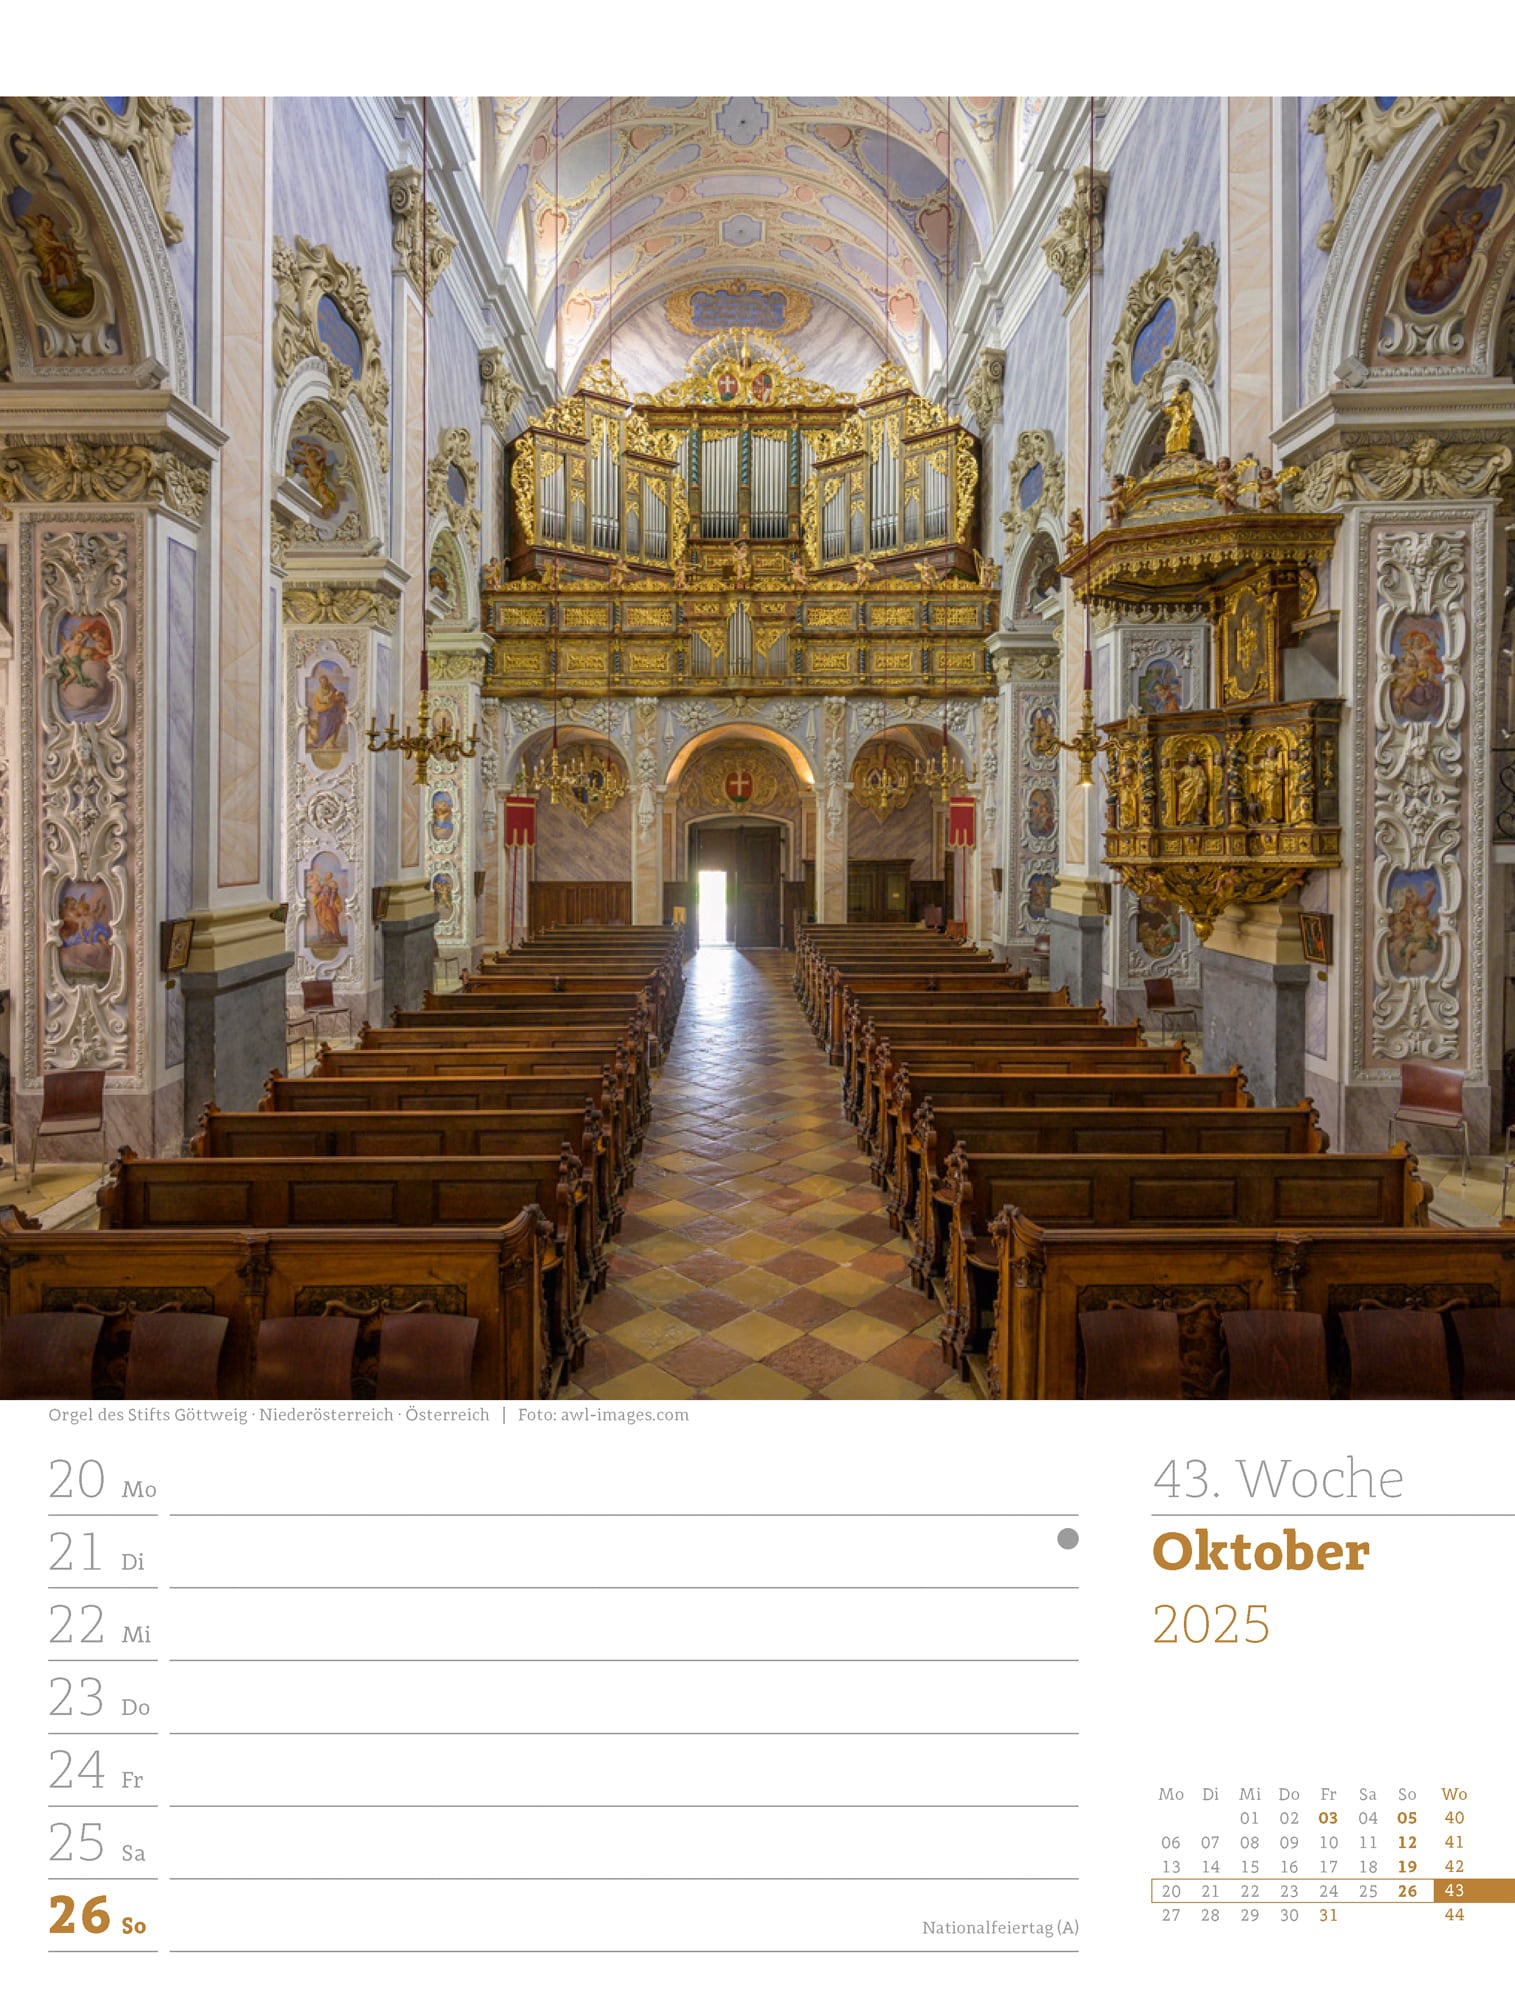 Ackermann Calendar Travel the World 2025 - Weekly Planner - Inside View 46